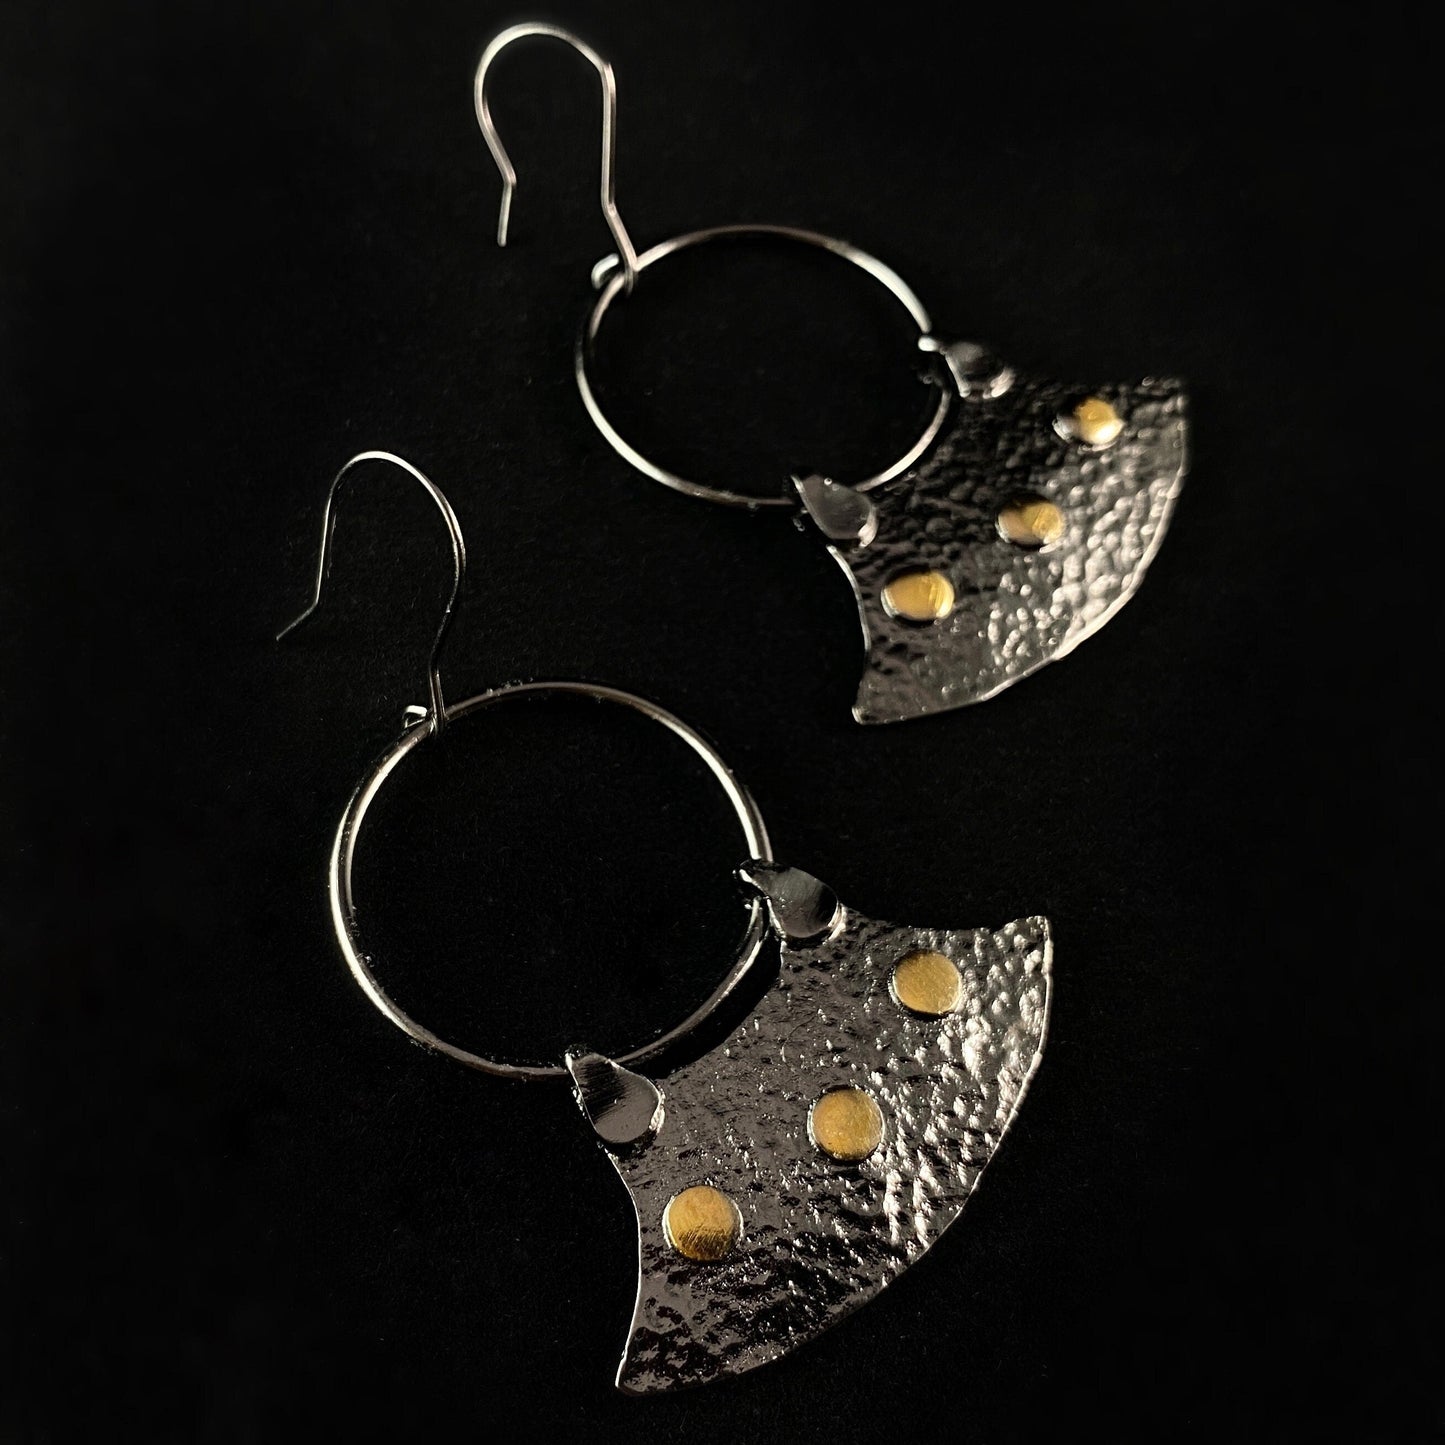 Dark Gunmetal Medallion Earrings with Gold Accent, Handmade, Nickel Free - Elegant Minimalist Jewelry for Women